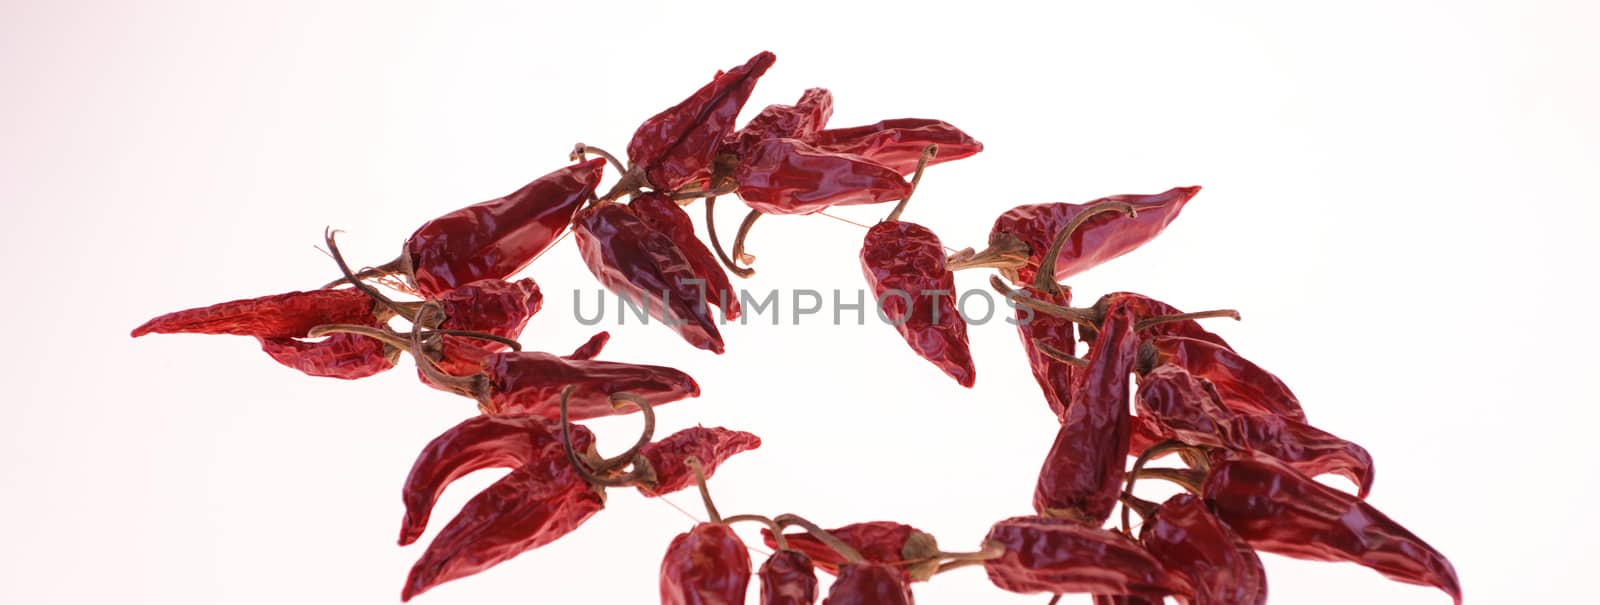 red pepper on white background by NagyDodo